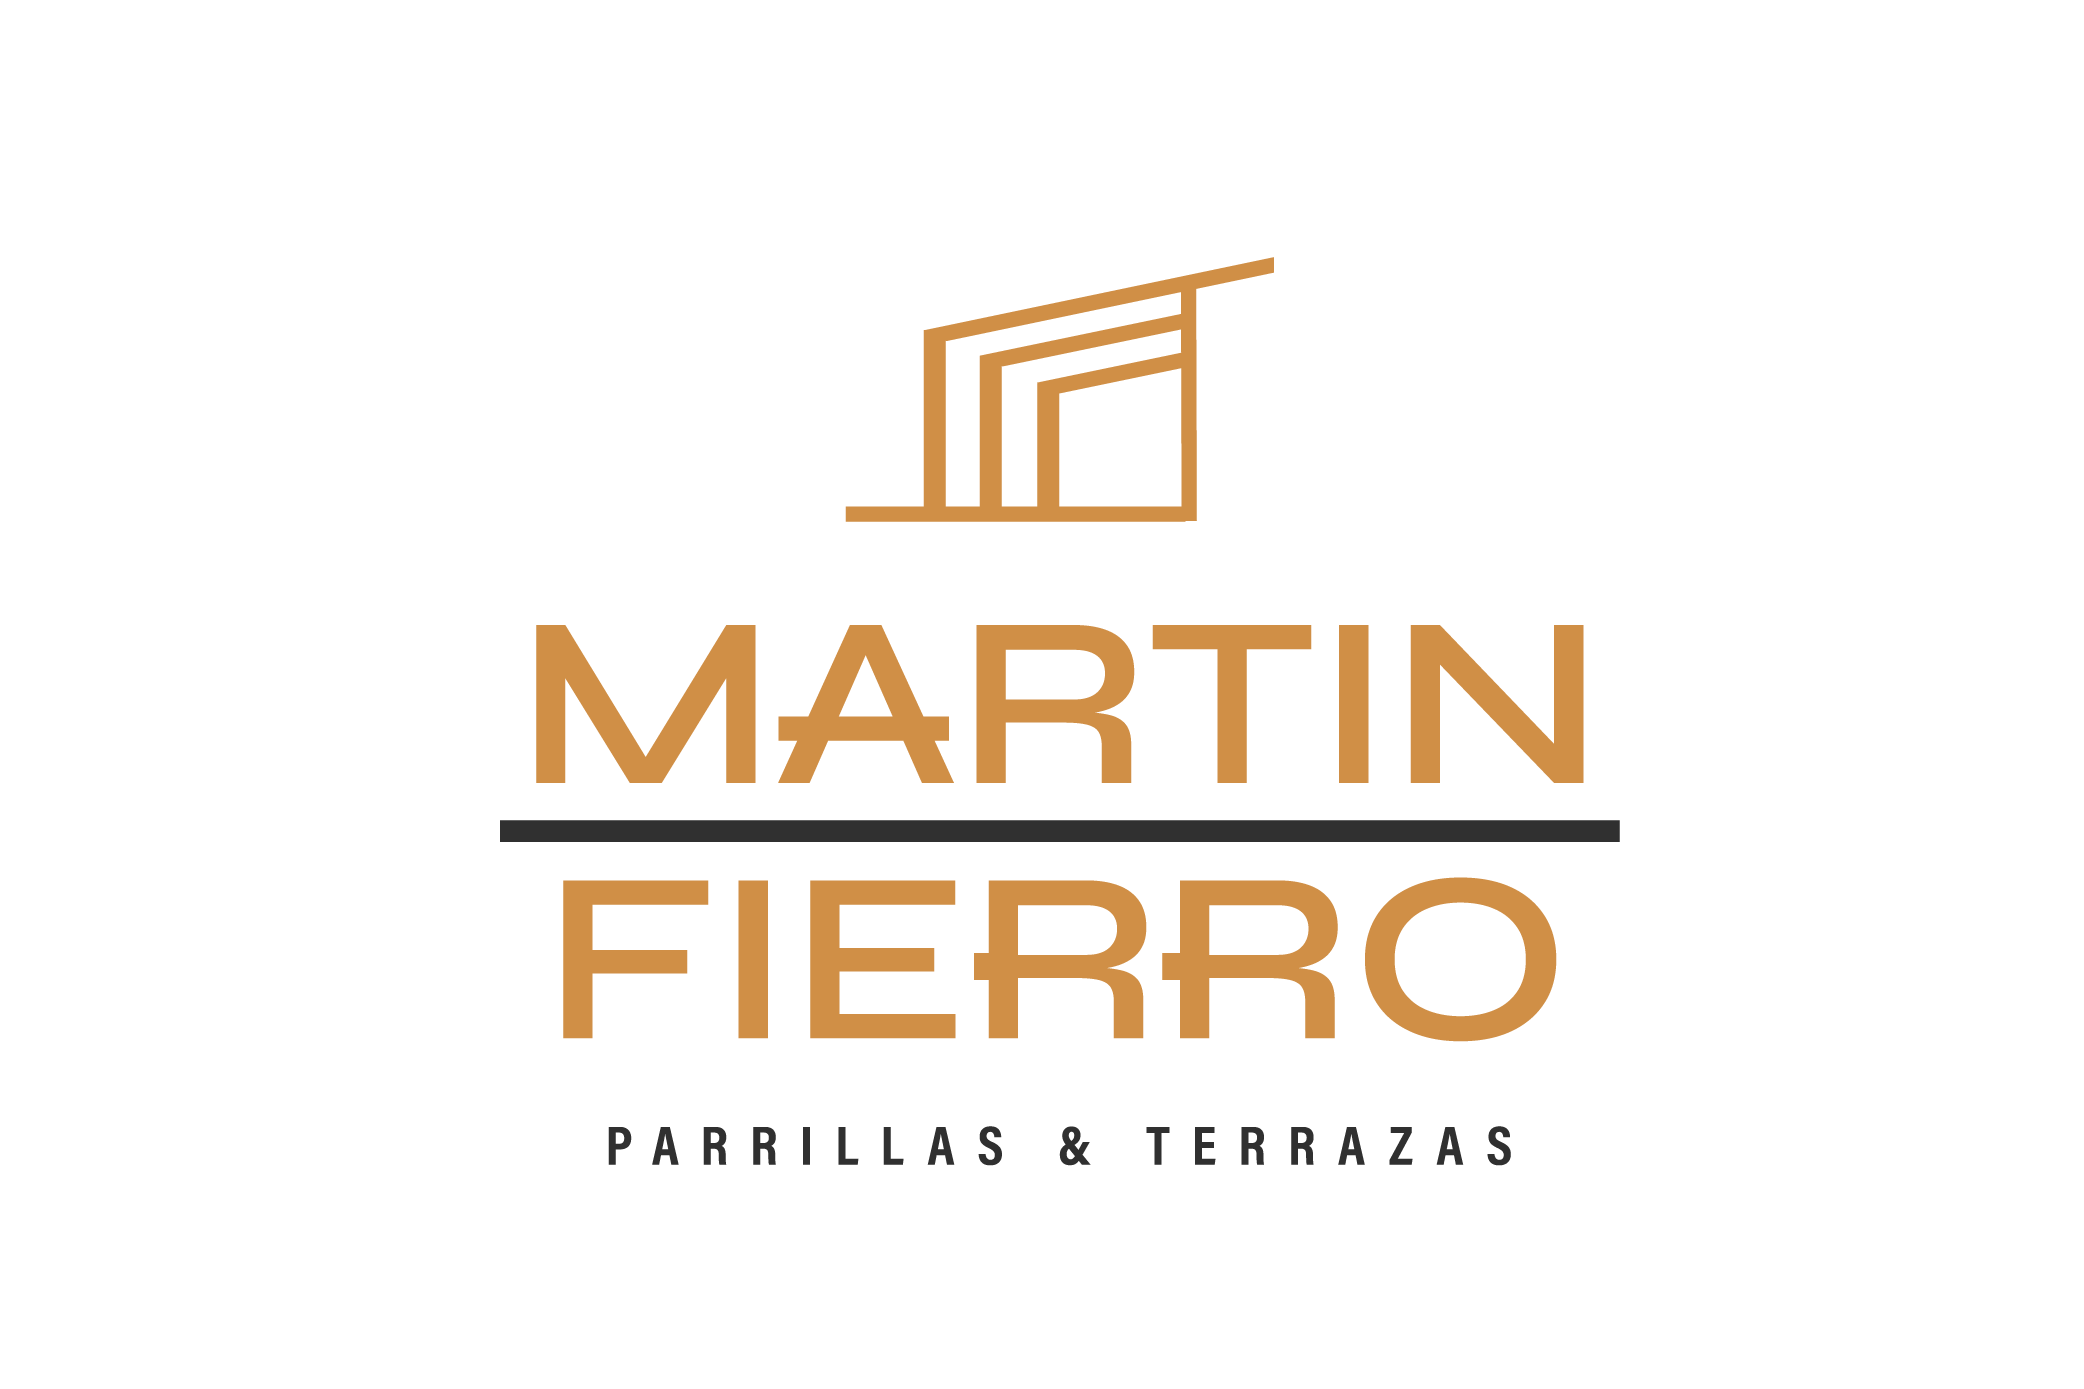 Parrillas & Terrazas Martin Fierro